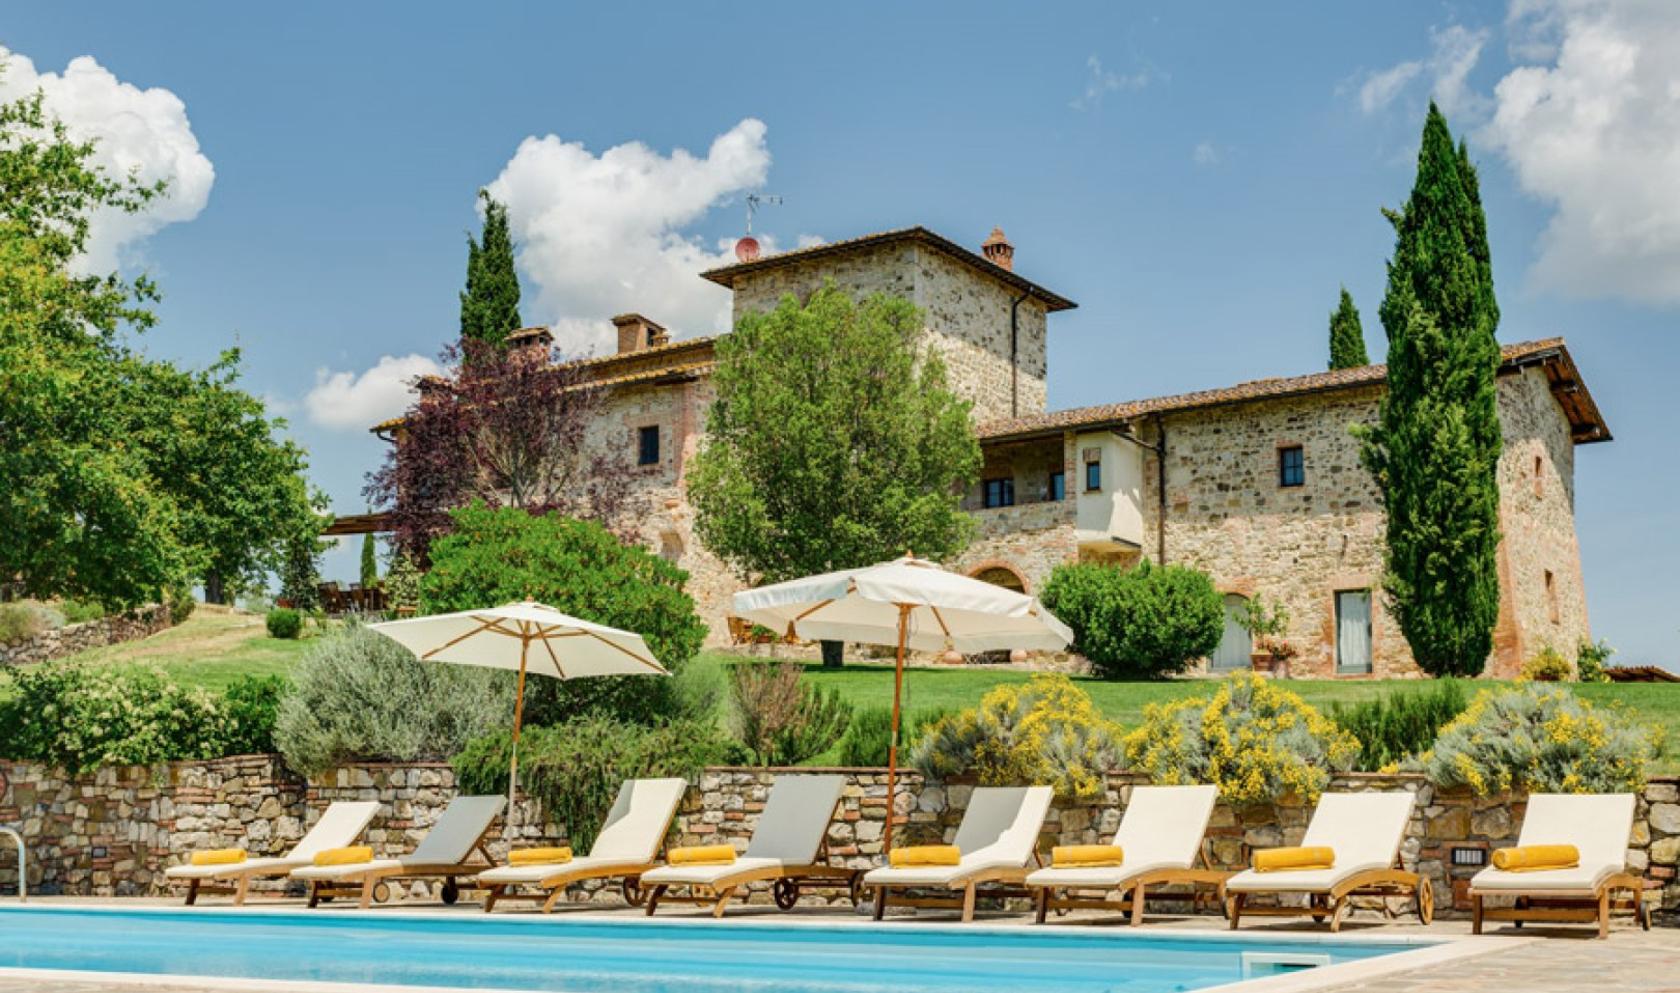 Toscana Immobiliare - Property to buy in Castelnuovo Berardenga, Siena, Tuscany, Italy